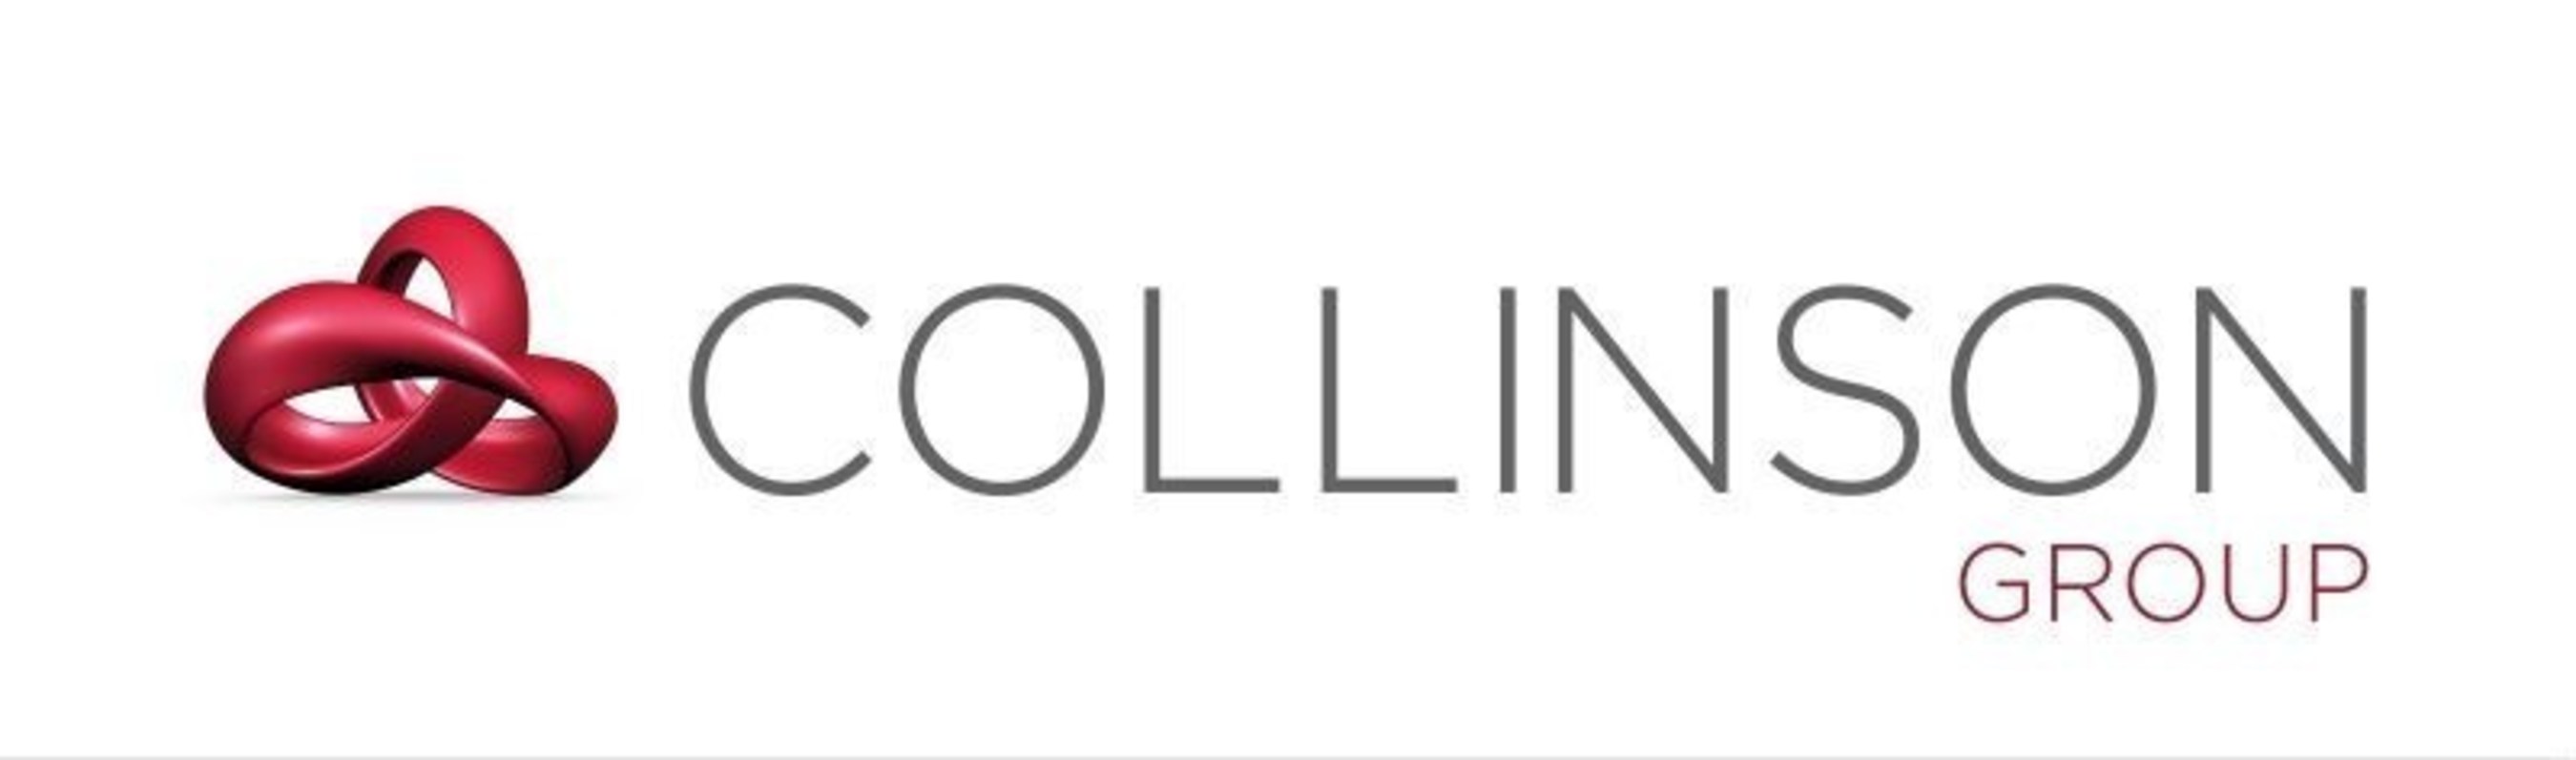 Collinson Group Logo (PRNewsFoto/Collinson Group) (PRNewsFoto/Collinson Group)